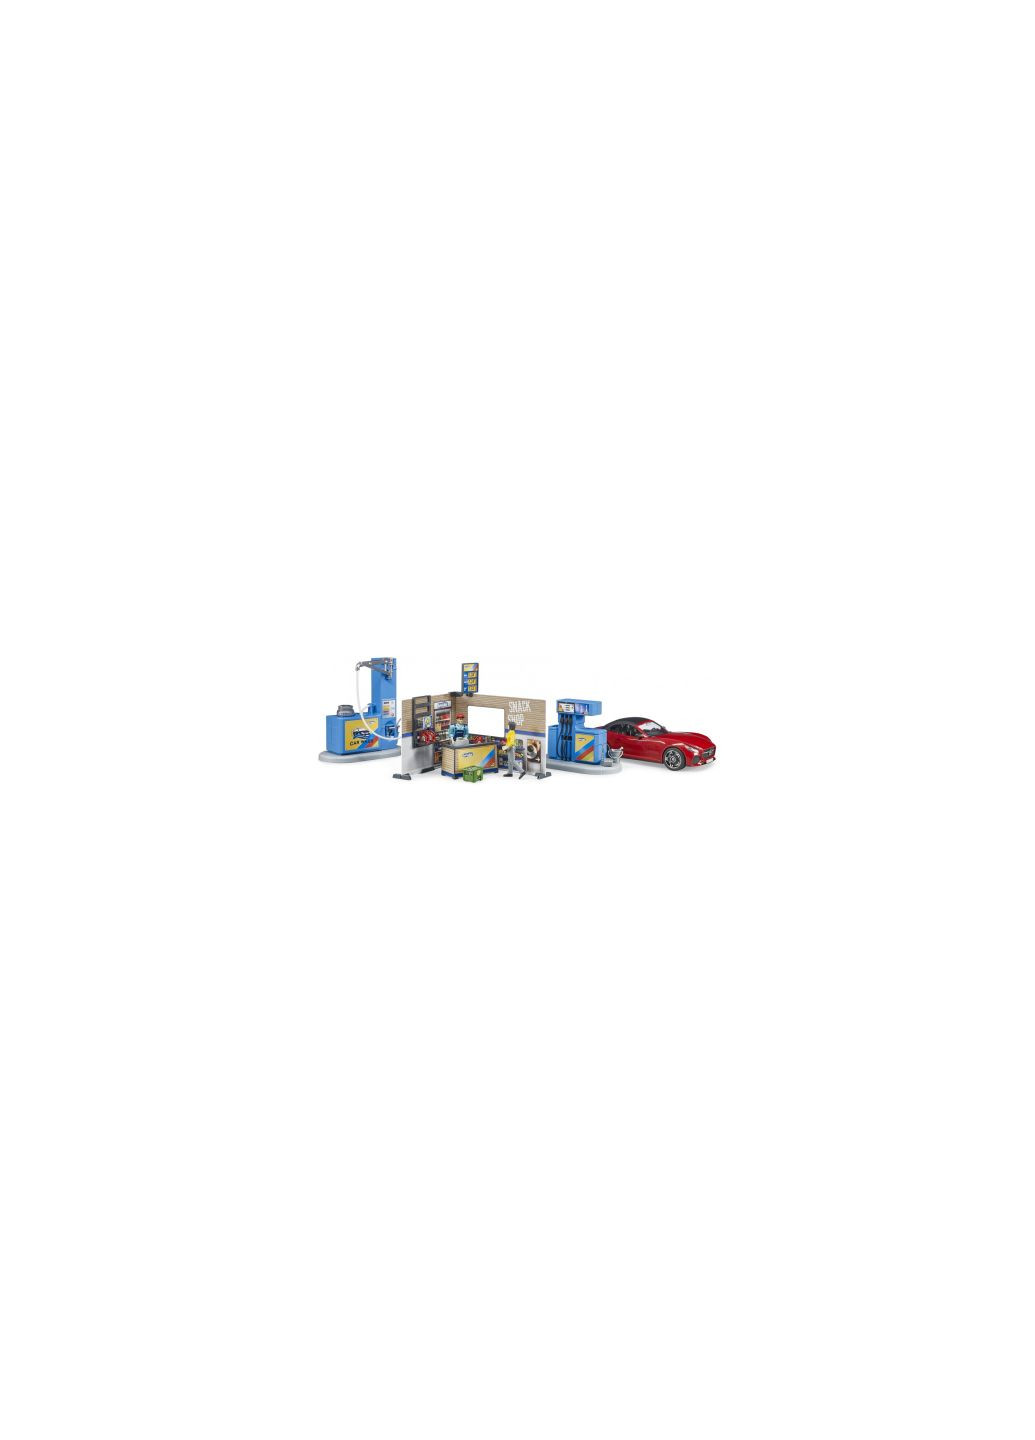 Игровой набор АЗС с автомойкой, автомобилем и фигурками (62111) Bruder азс з автомийкою, автомобілем та фігурками (275646504)